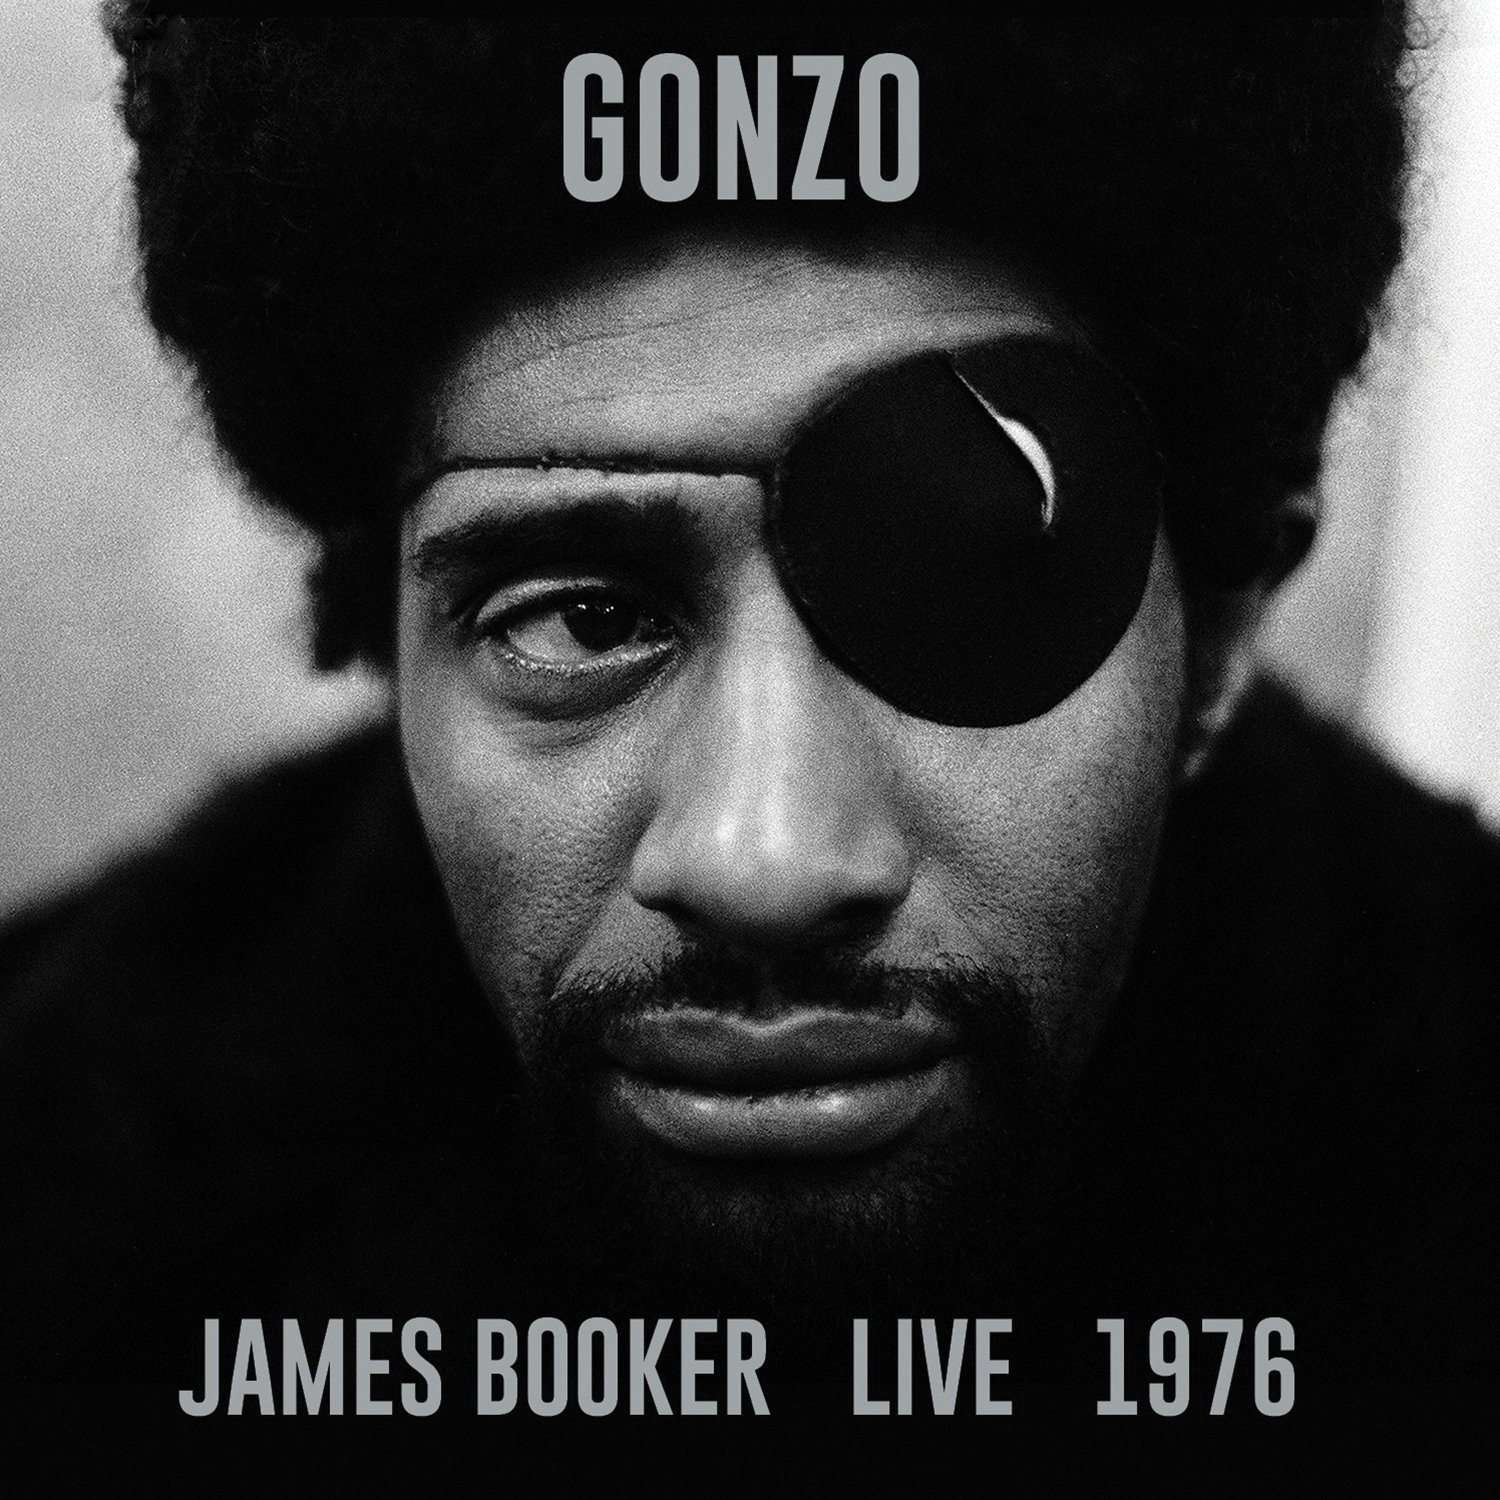 James Booker - Gonzo Live 1976 - Mvd Entertainment Group B2B-6767